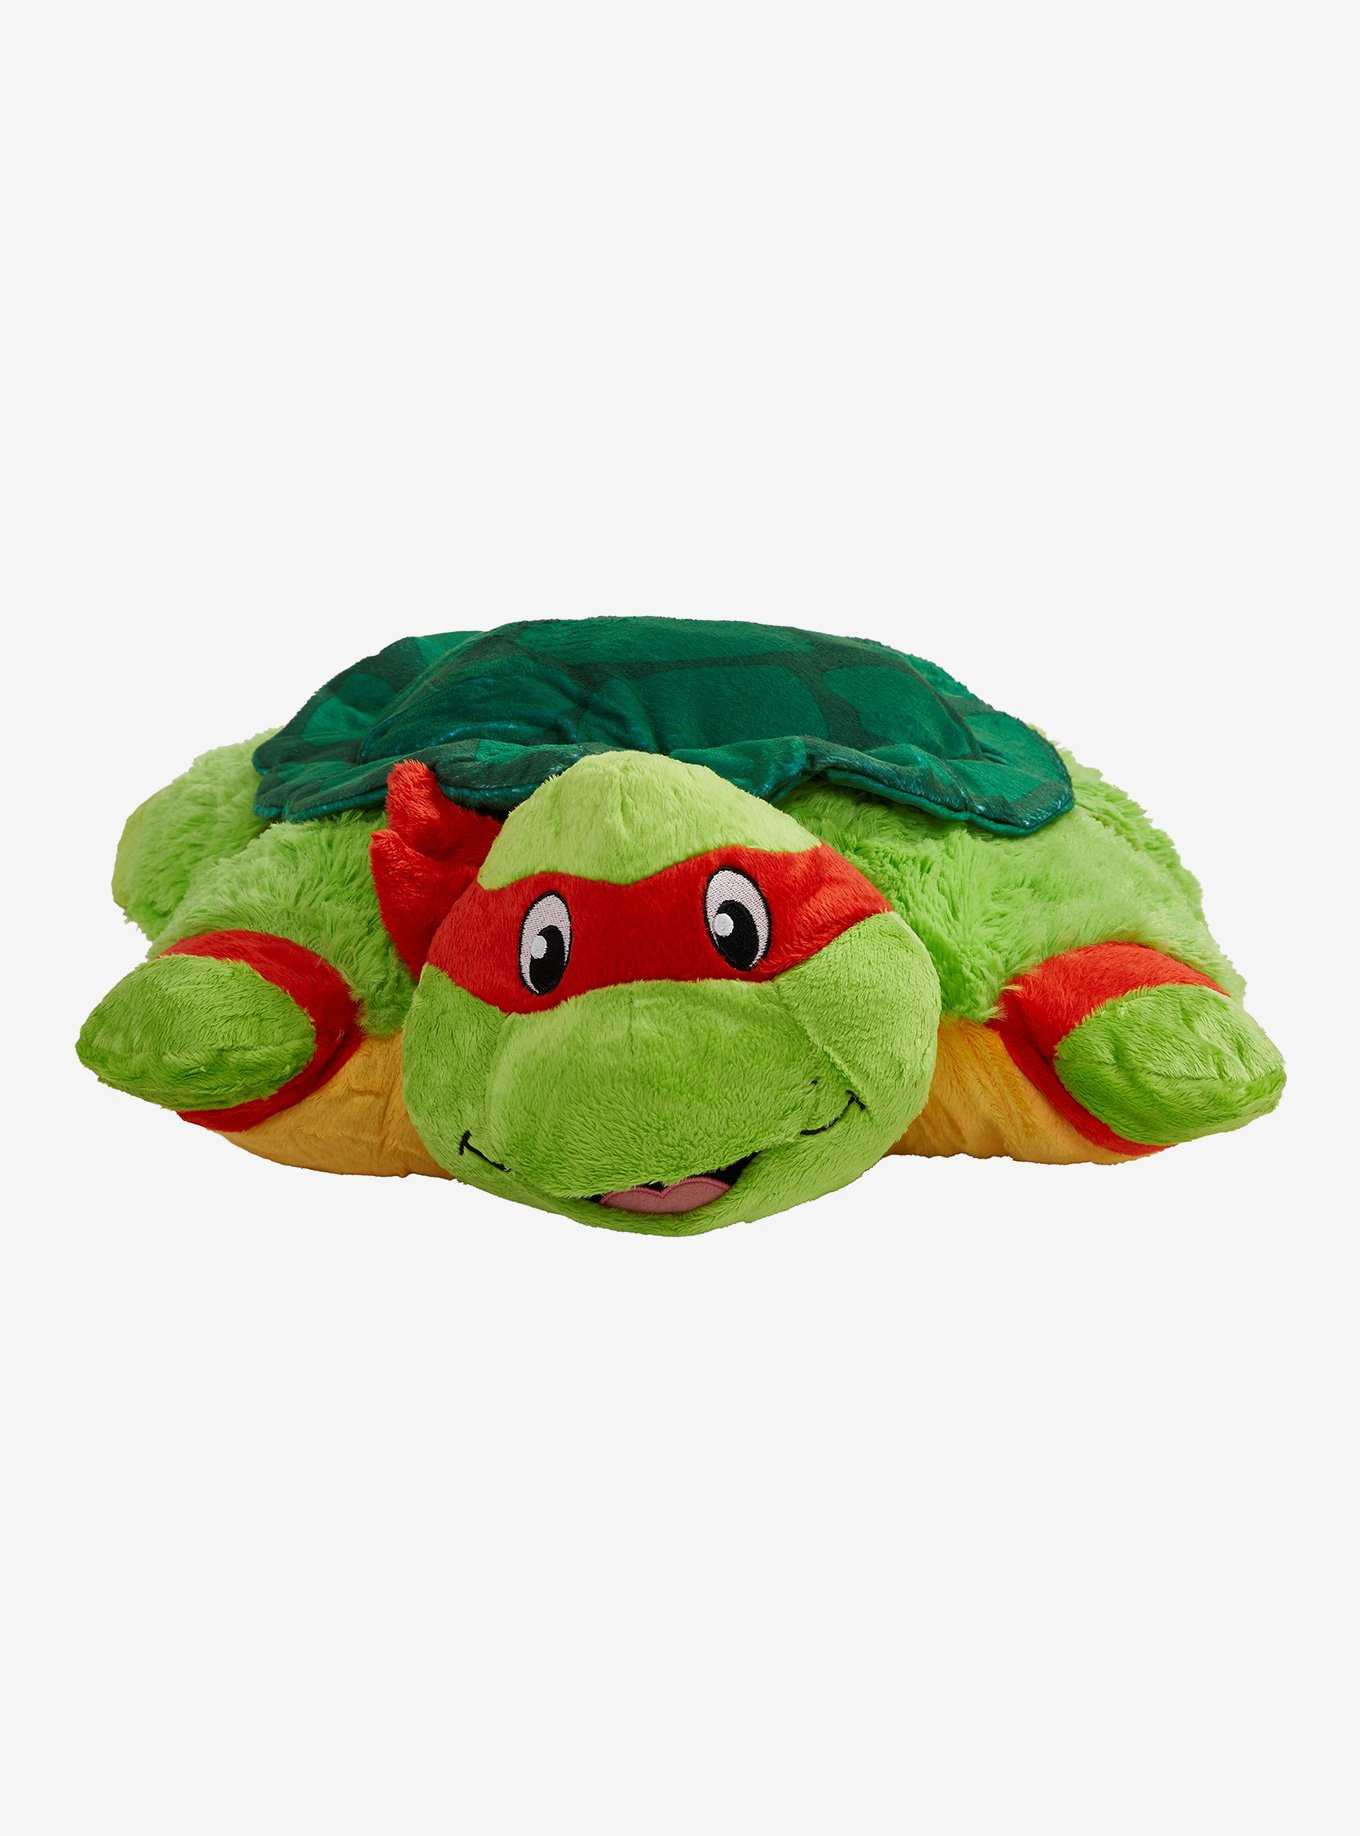 Teenage Mutant Ninja Turtles Raphael Pillow Pets Plush Toy, , hi-res